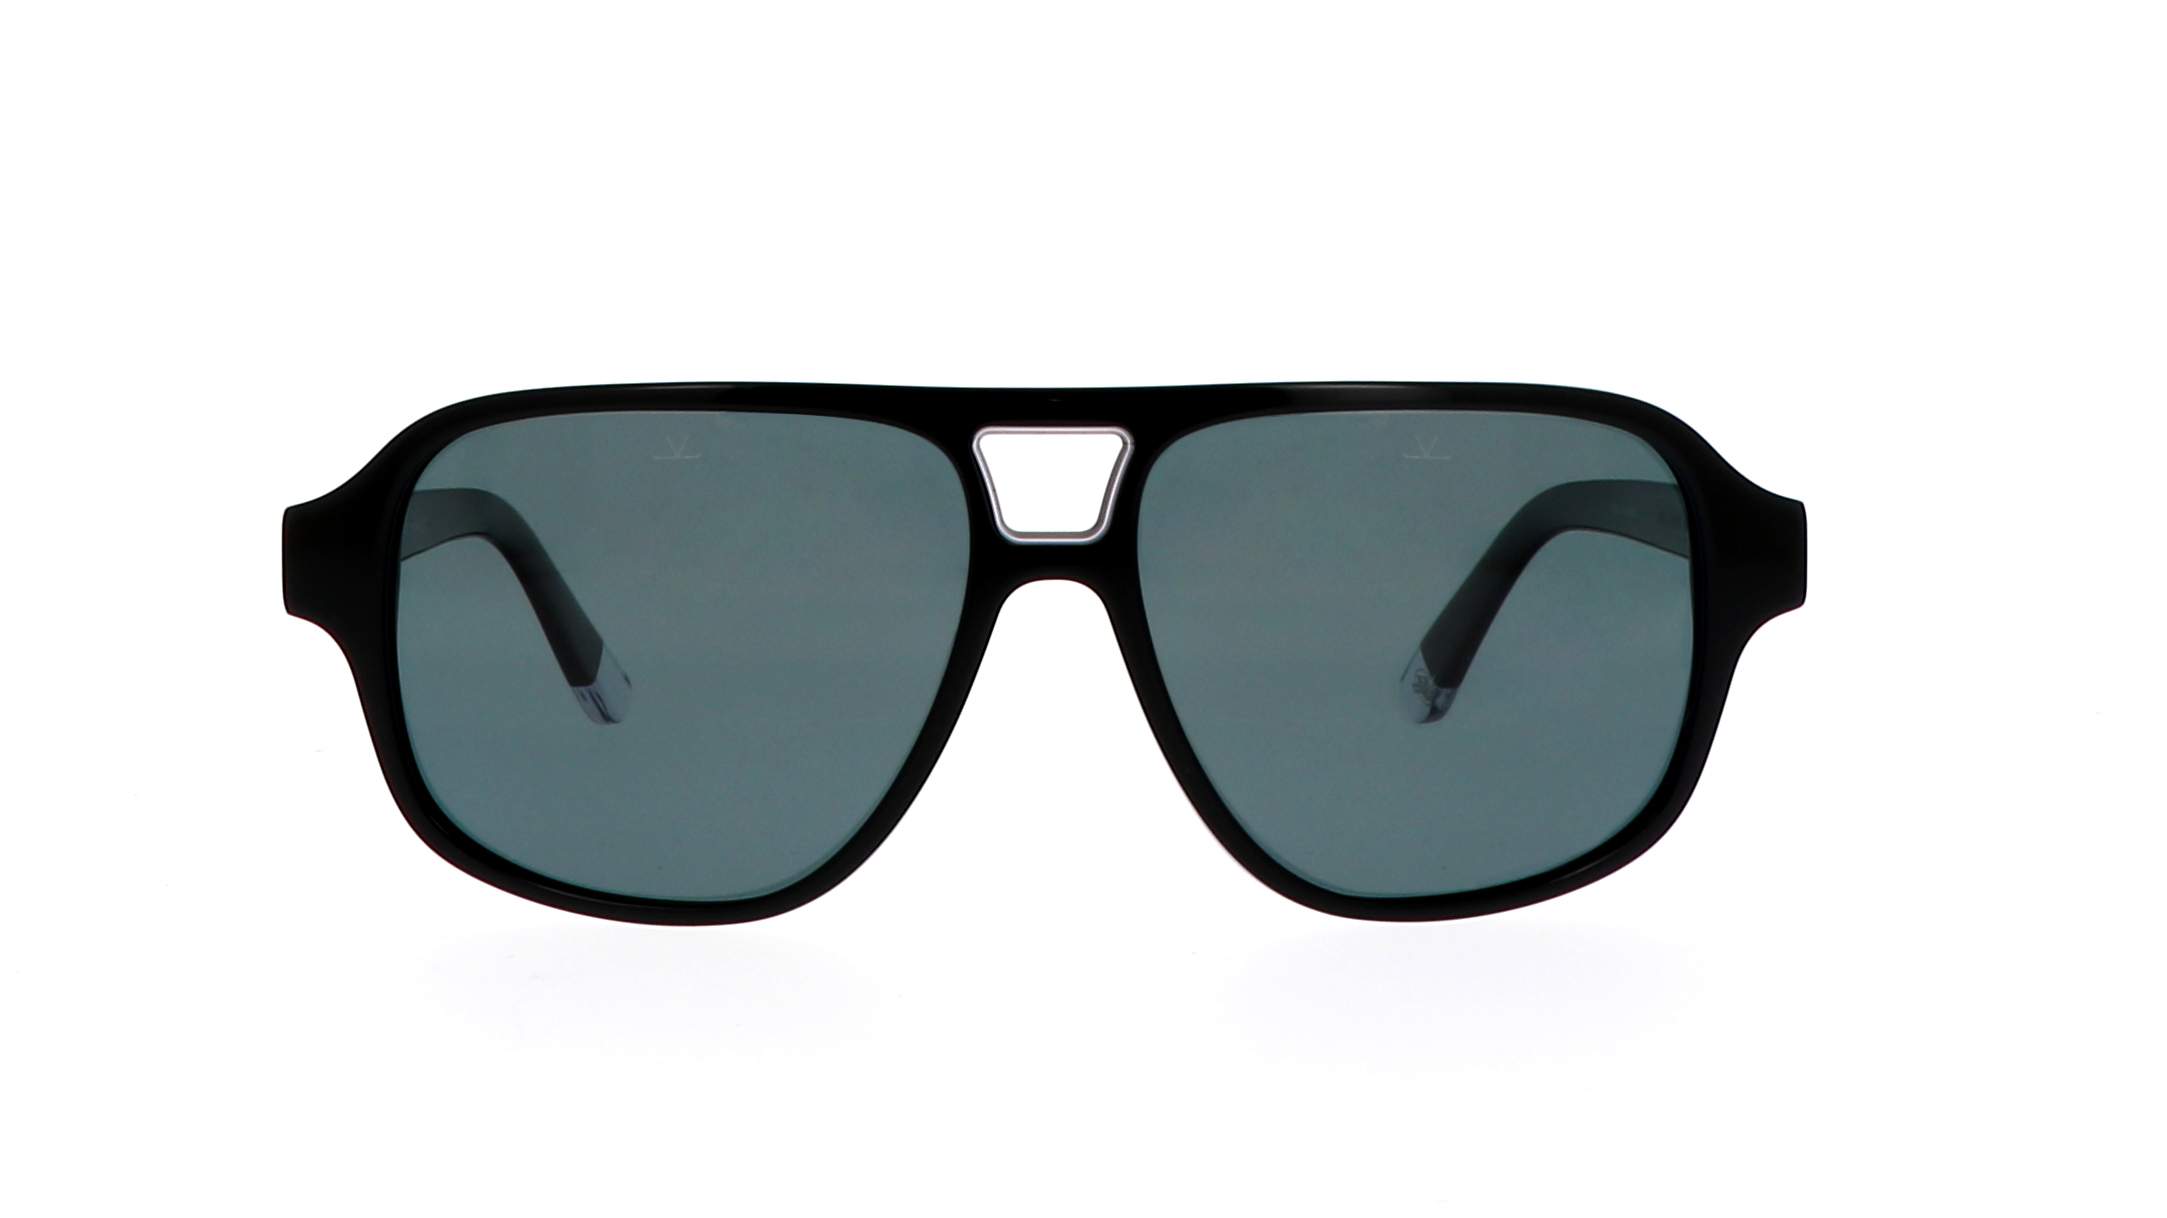 Sunglasses Vuarnet Ridge 2101 VL2101 0001 1622 59-14 Black in stock ...